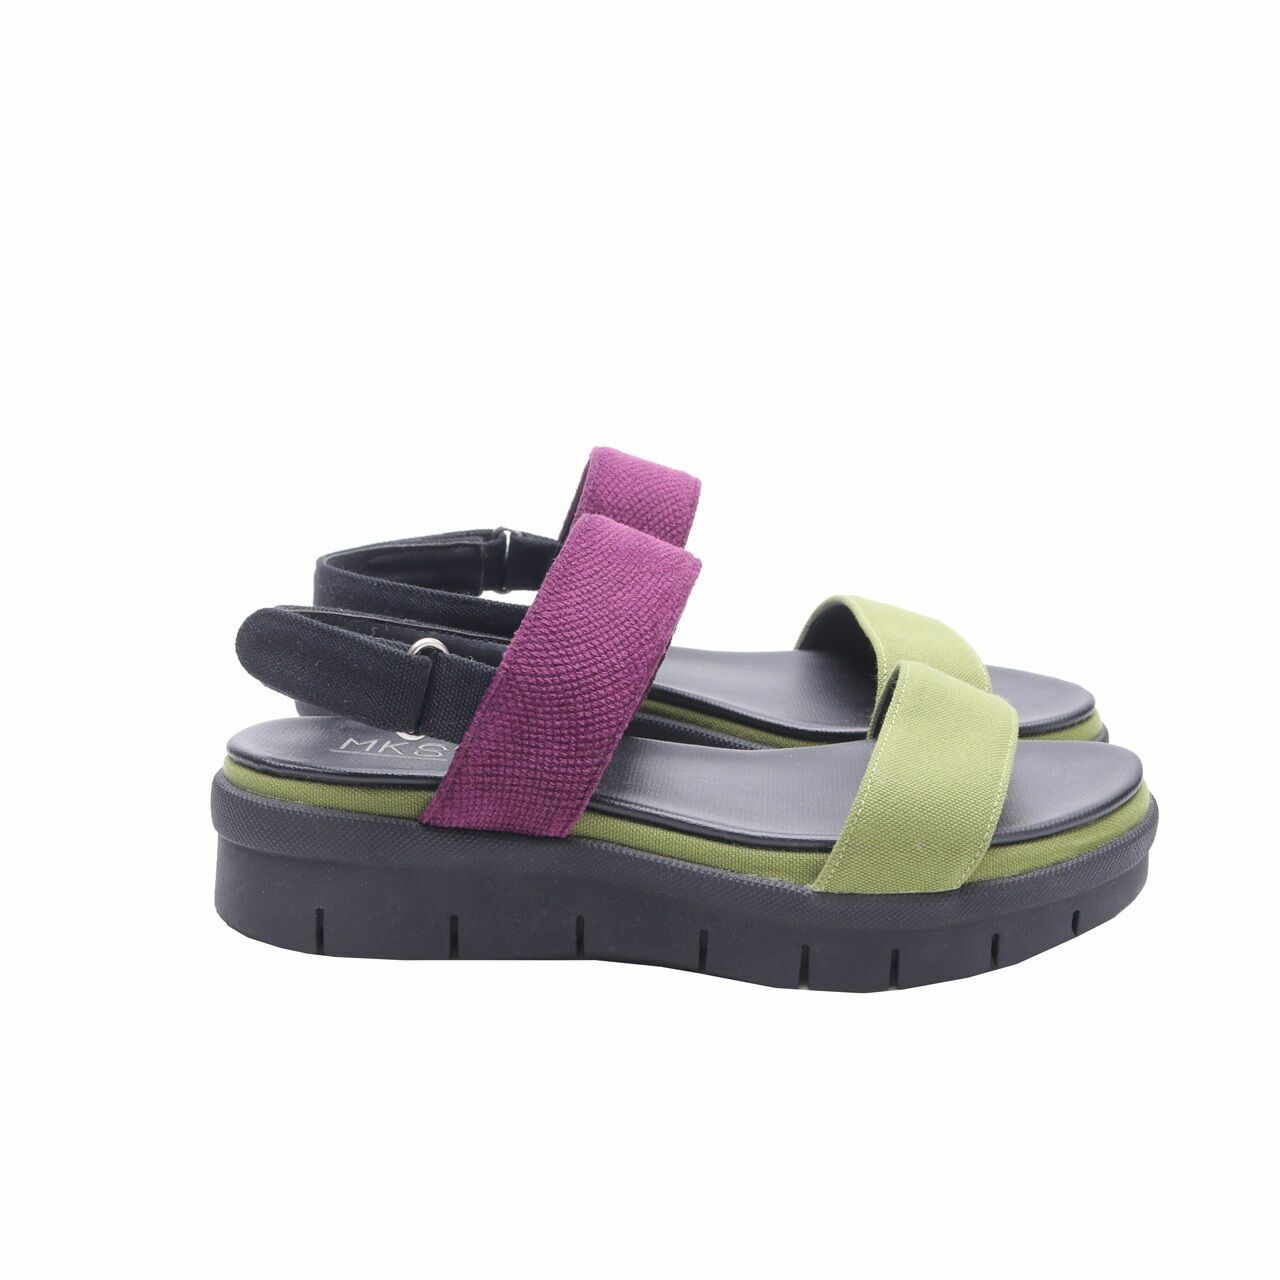 MKS Green & Purple Strap Back Sandals